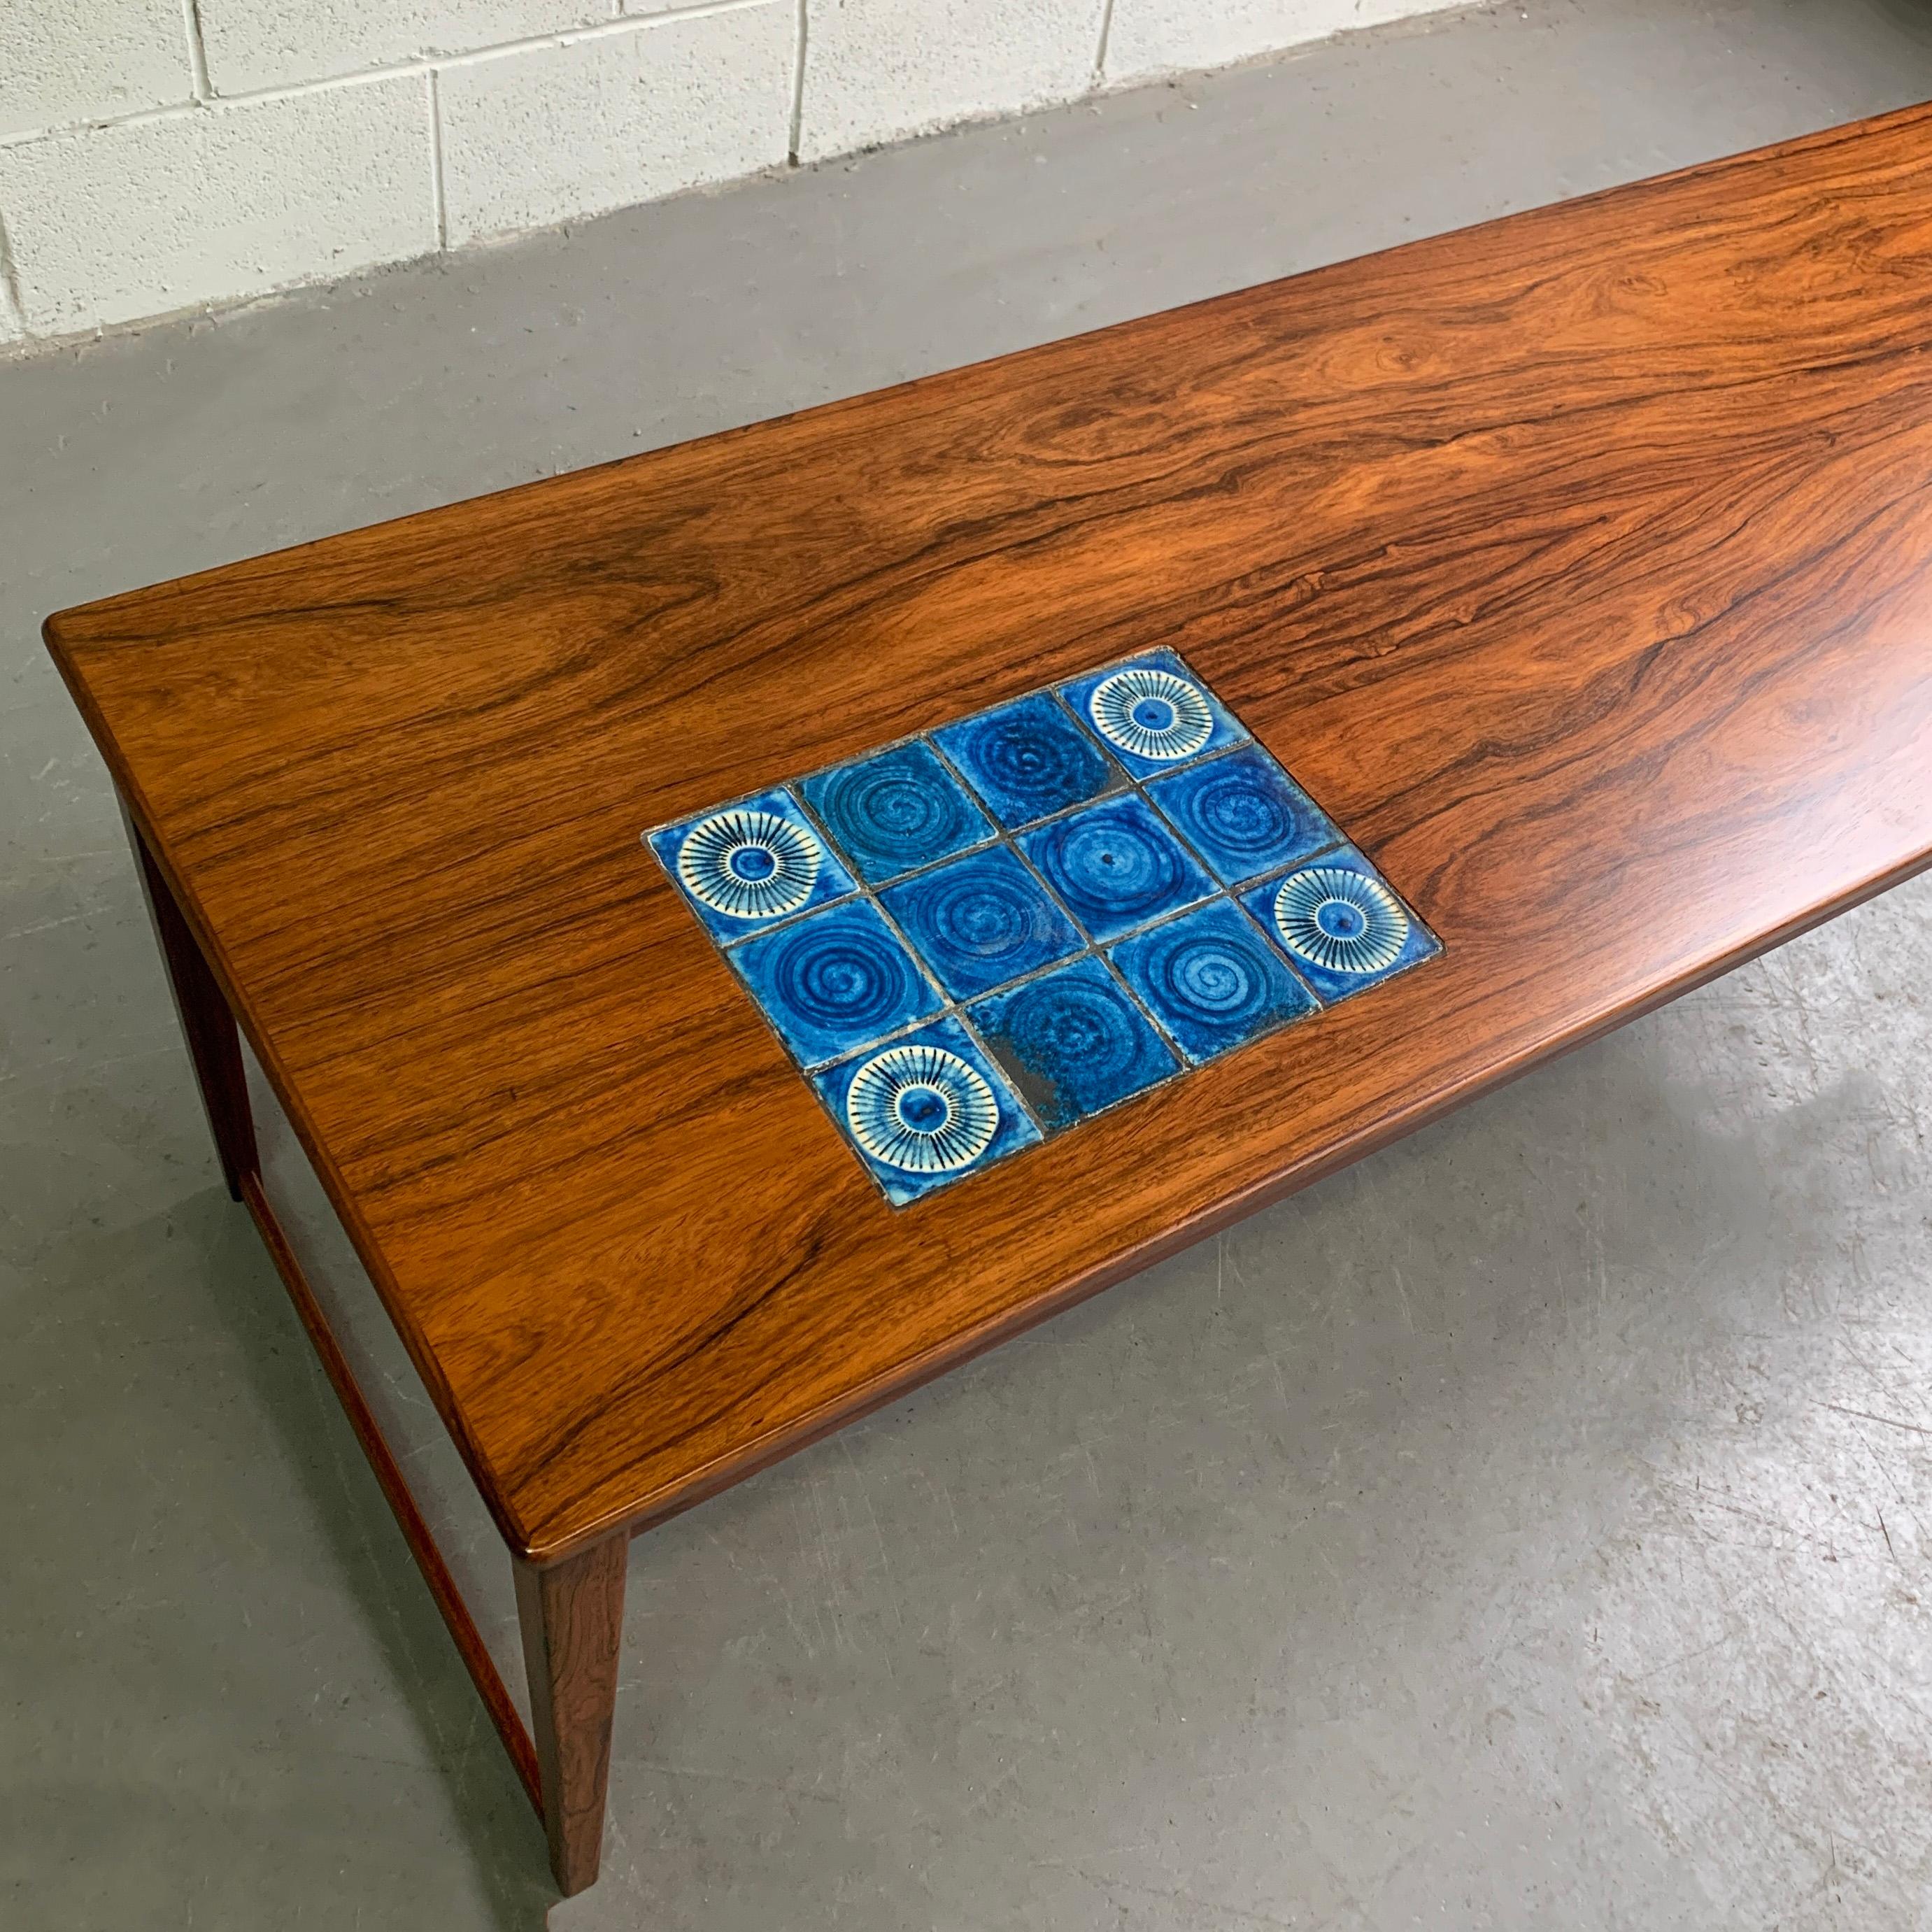 20th Century Danish Modern Rosewood Coffee Table With Ceramic Inlay